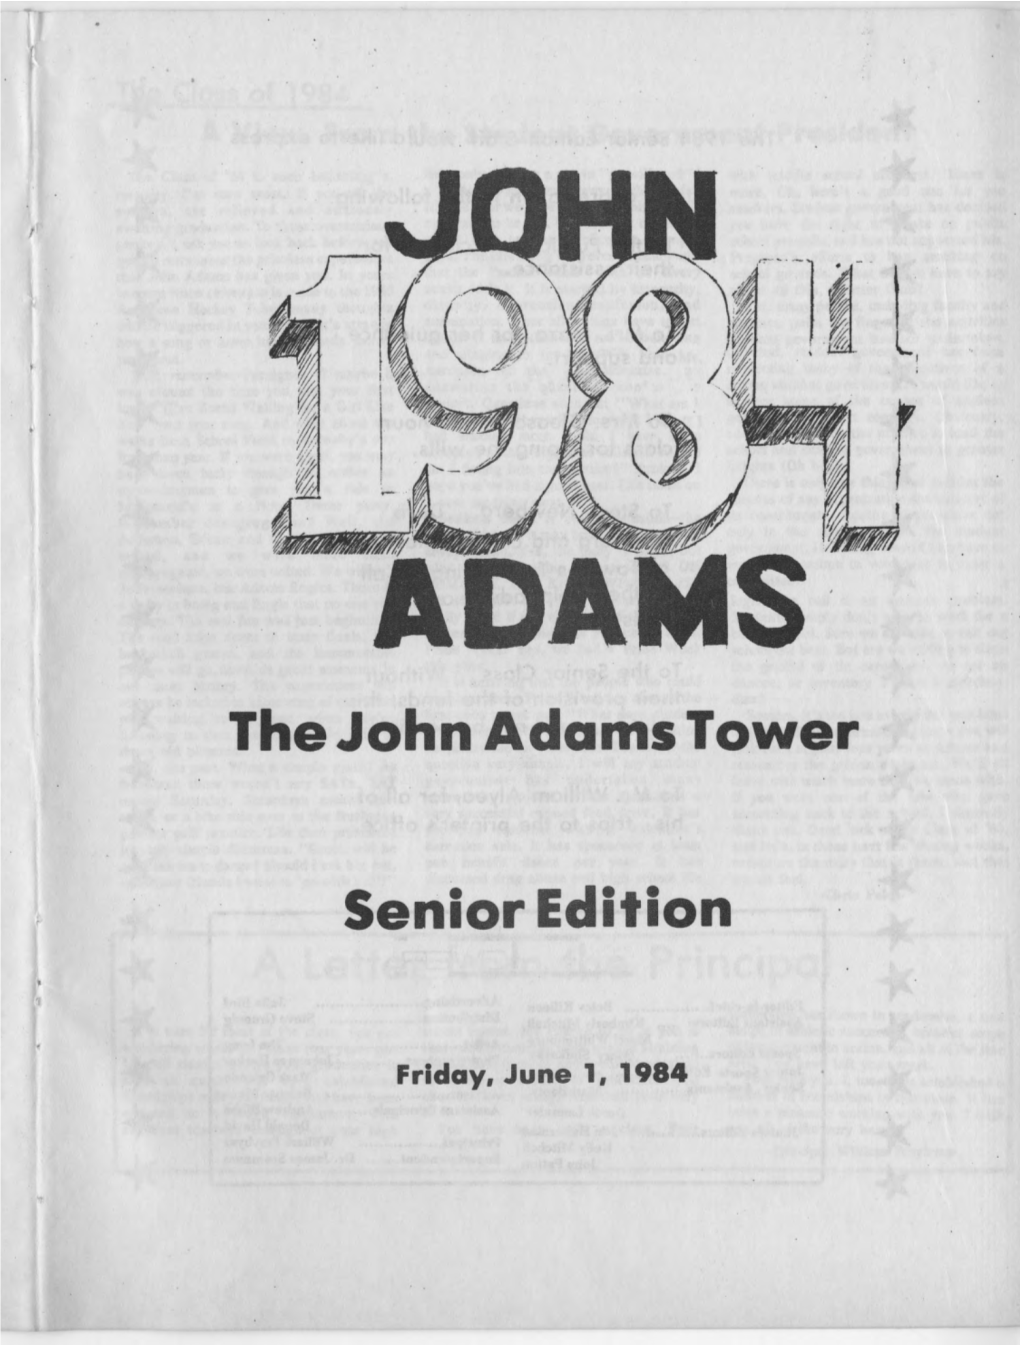 The John Adams Tower Senior Edition